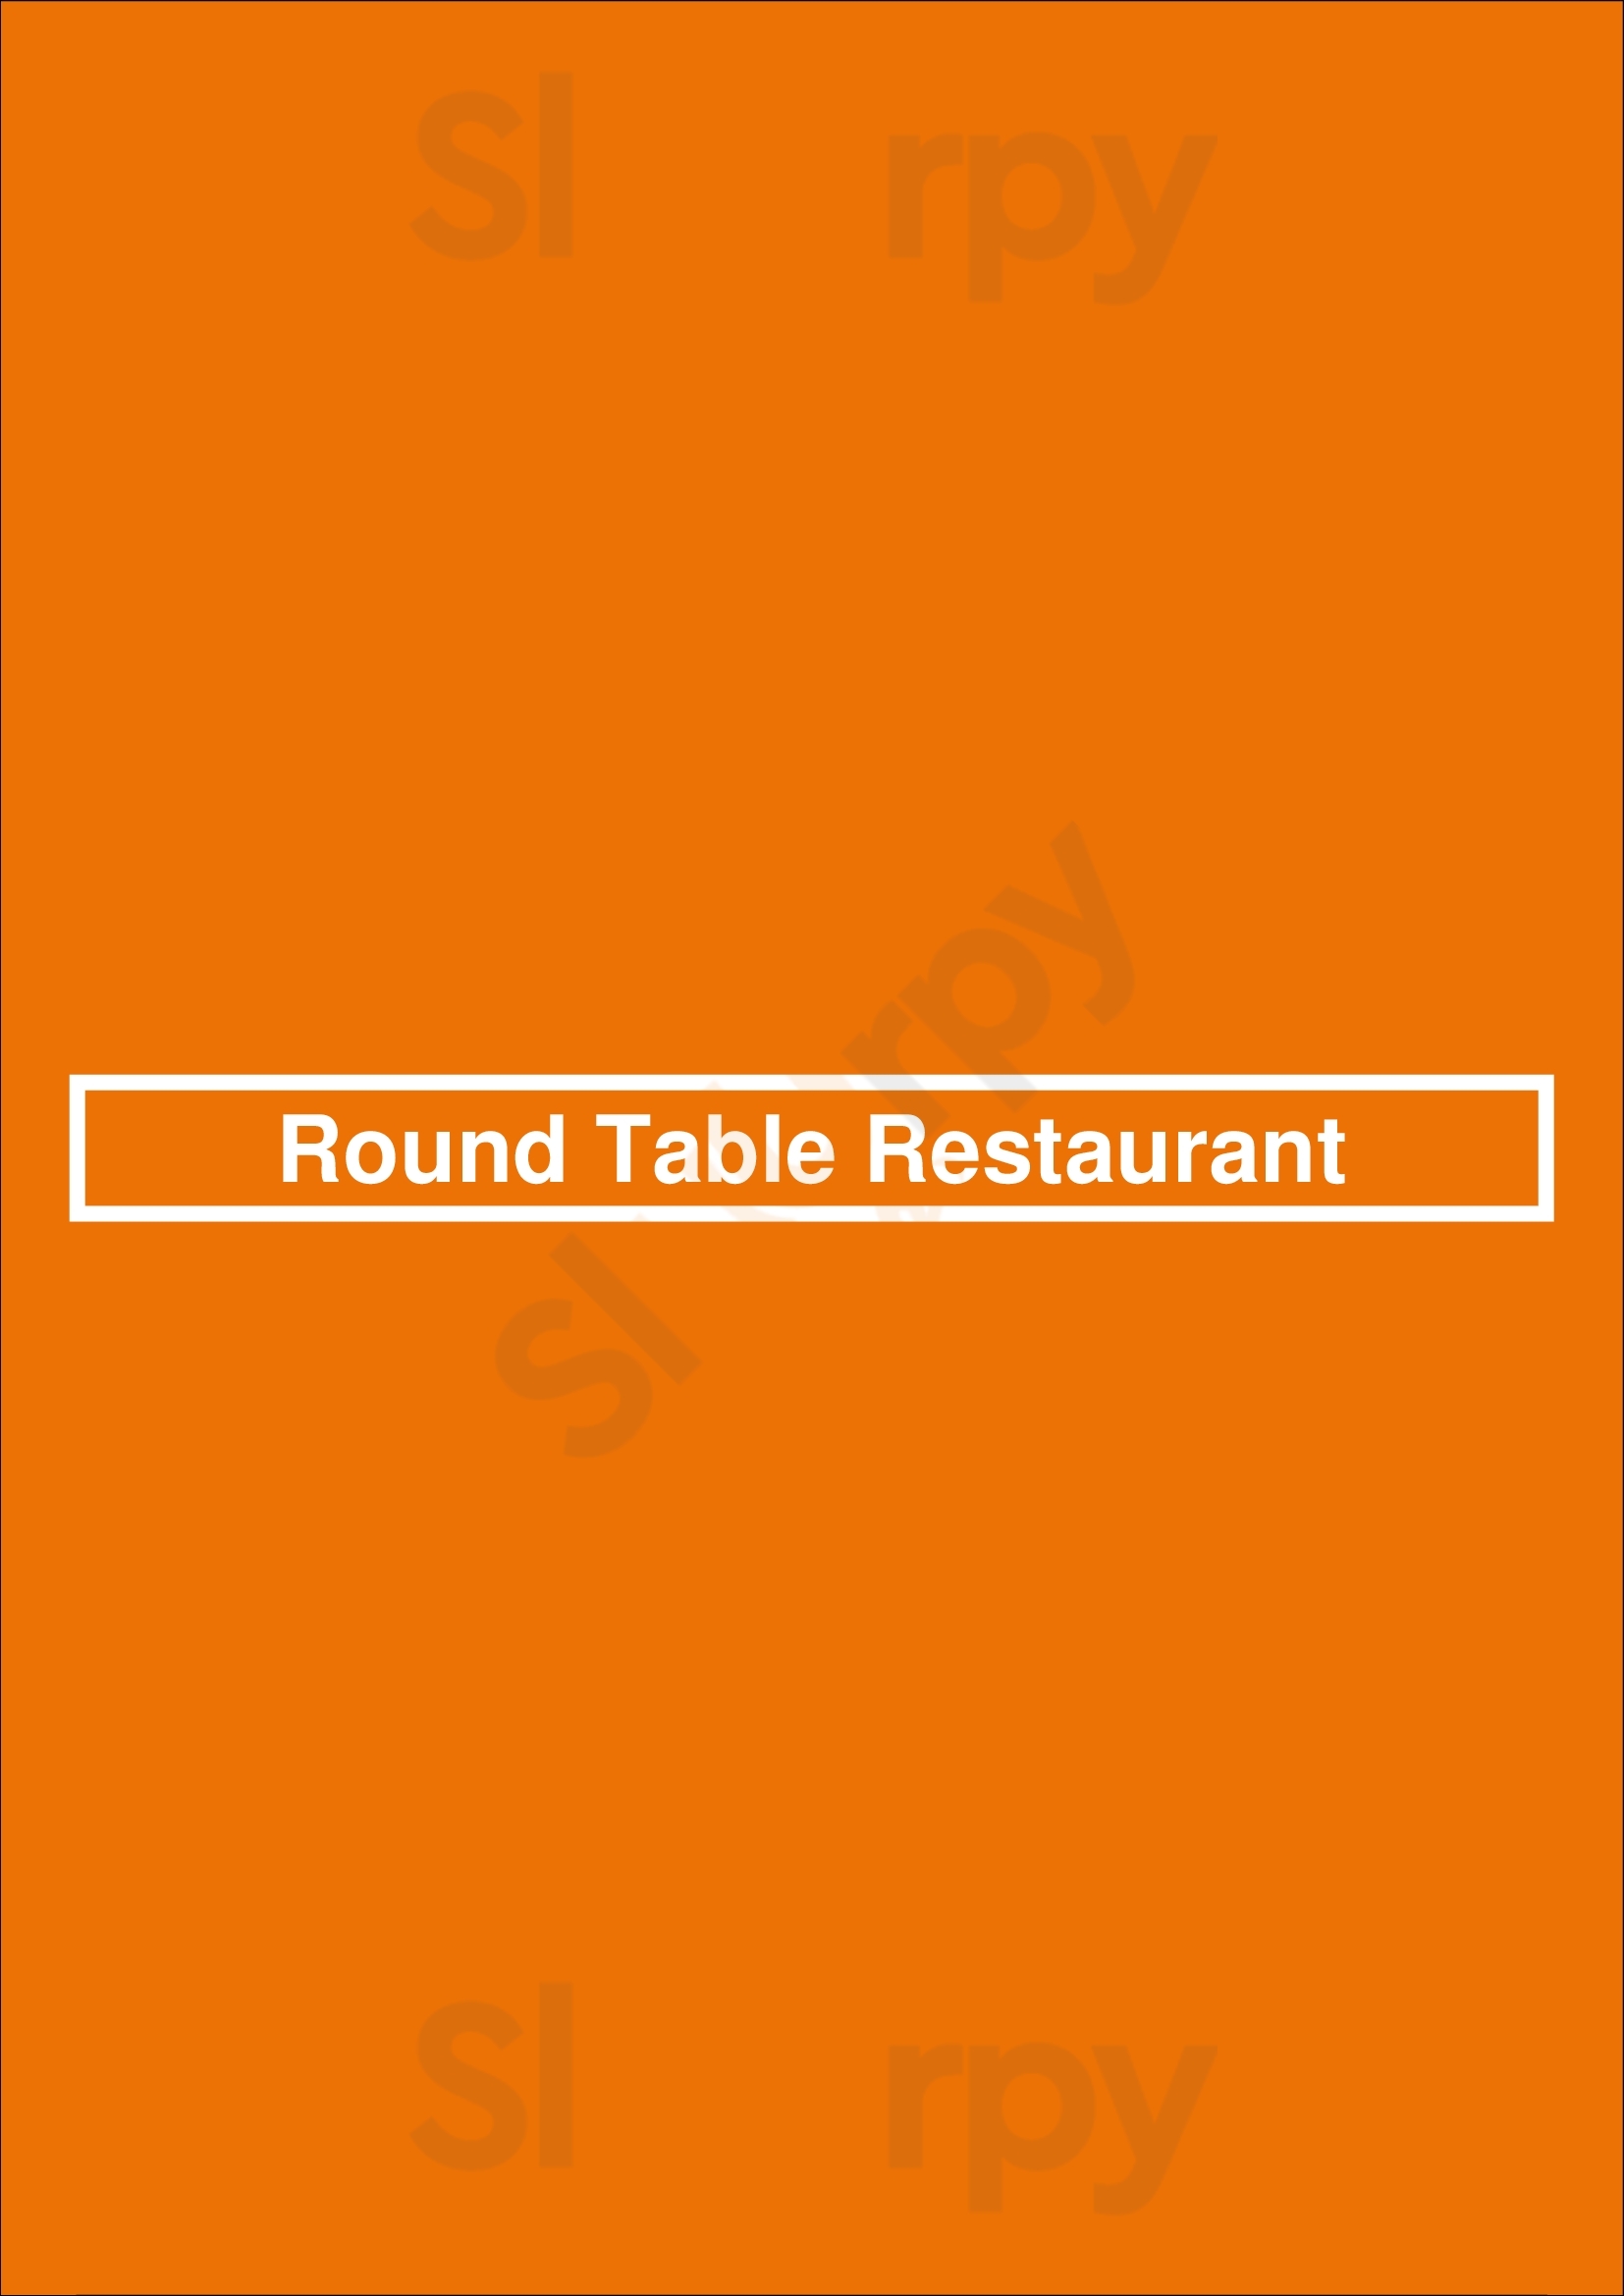 Round Table Restaurant New York City Menu - 1